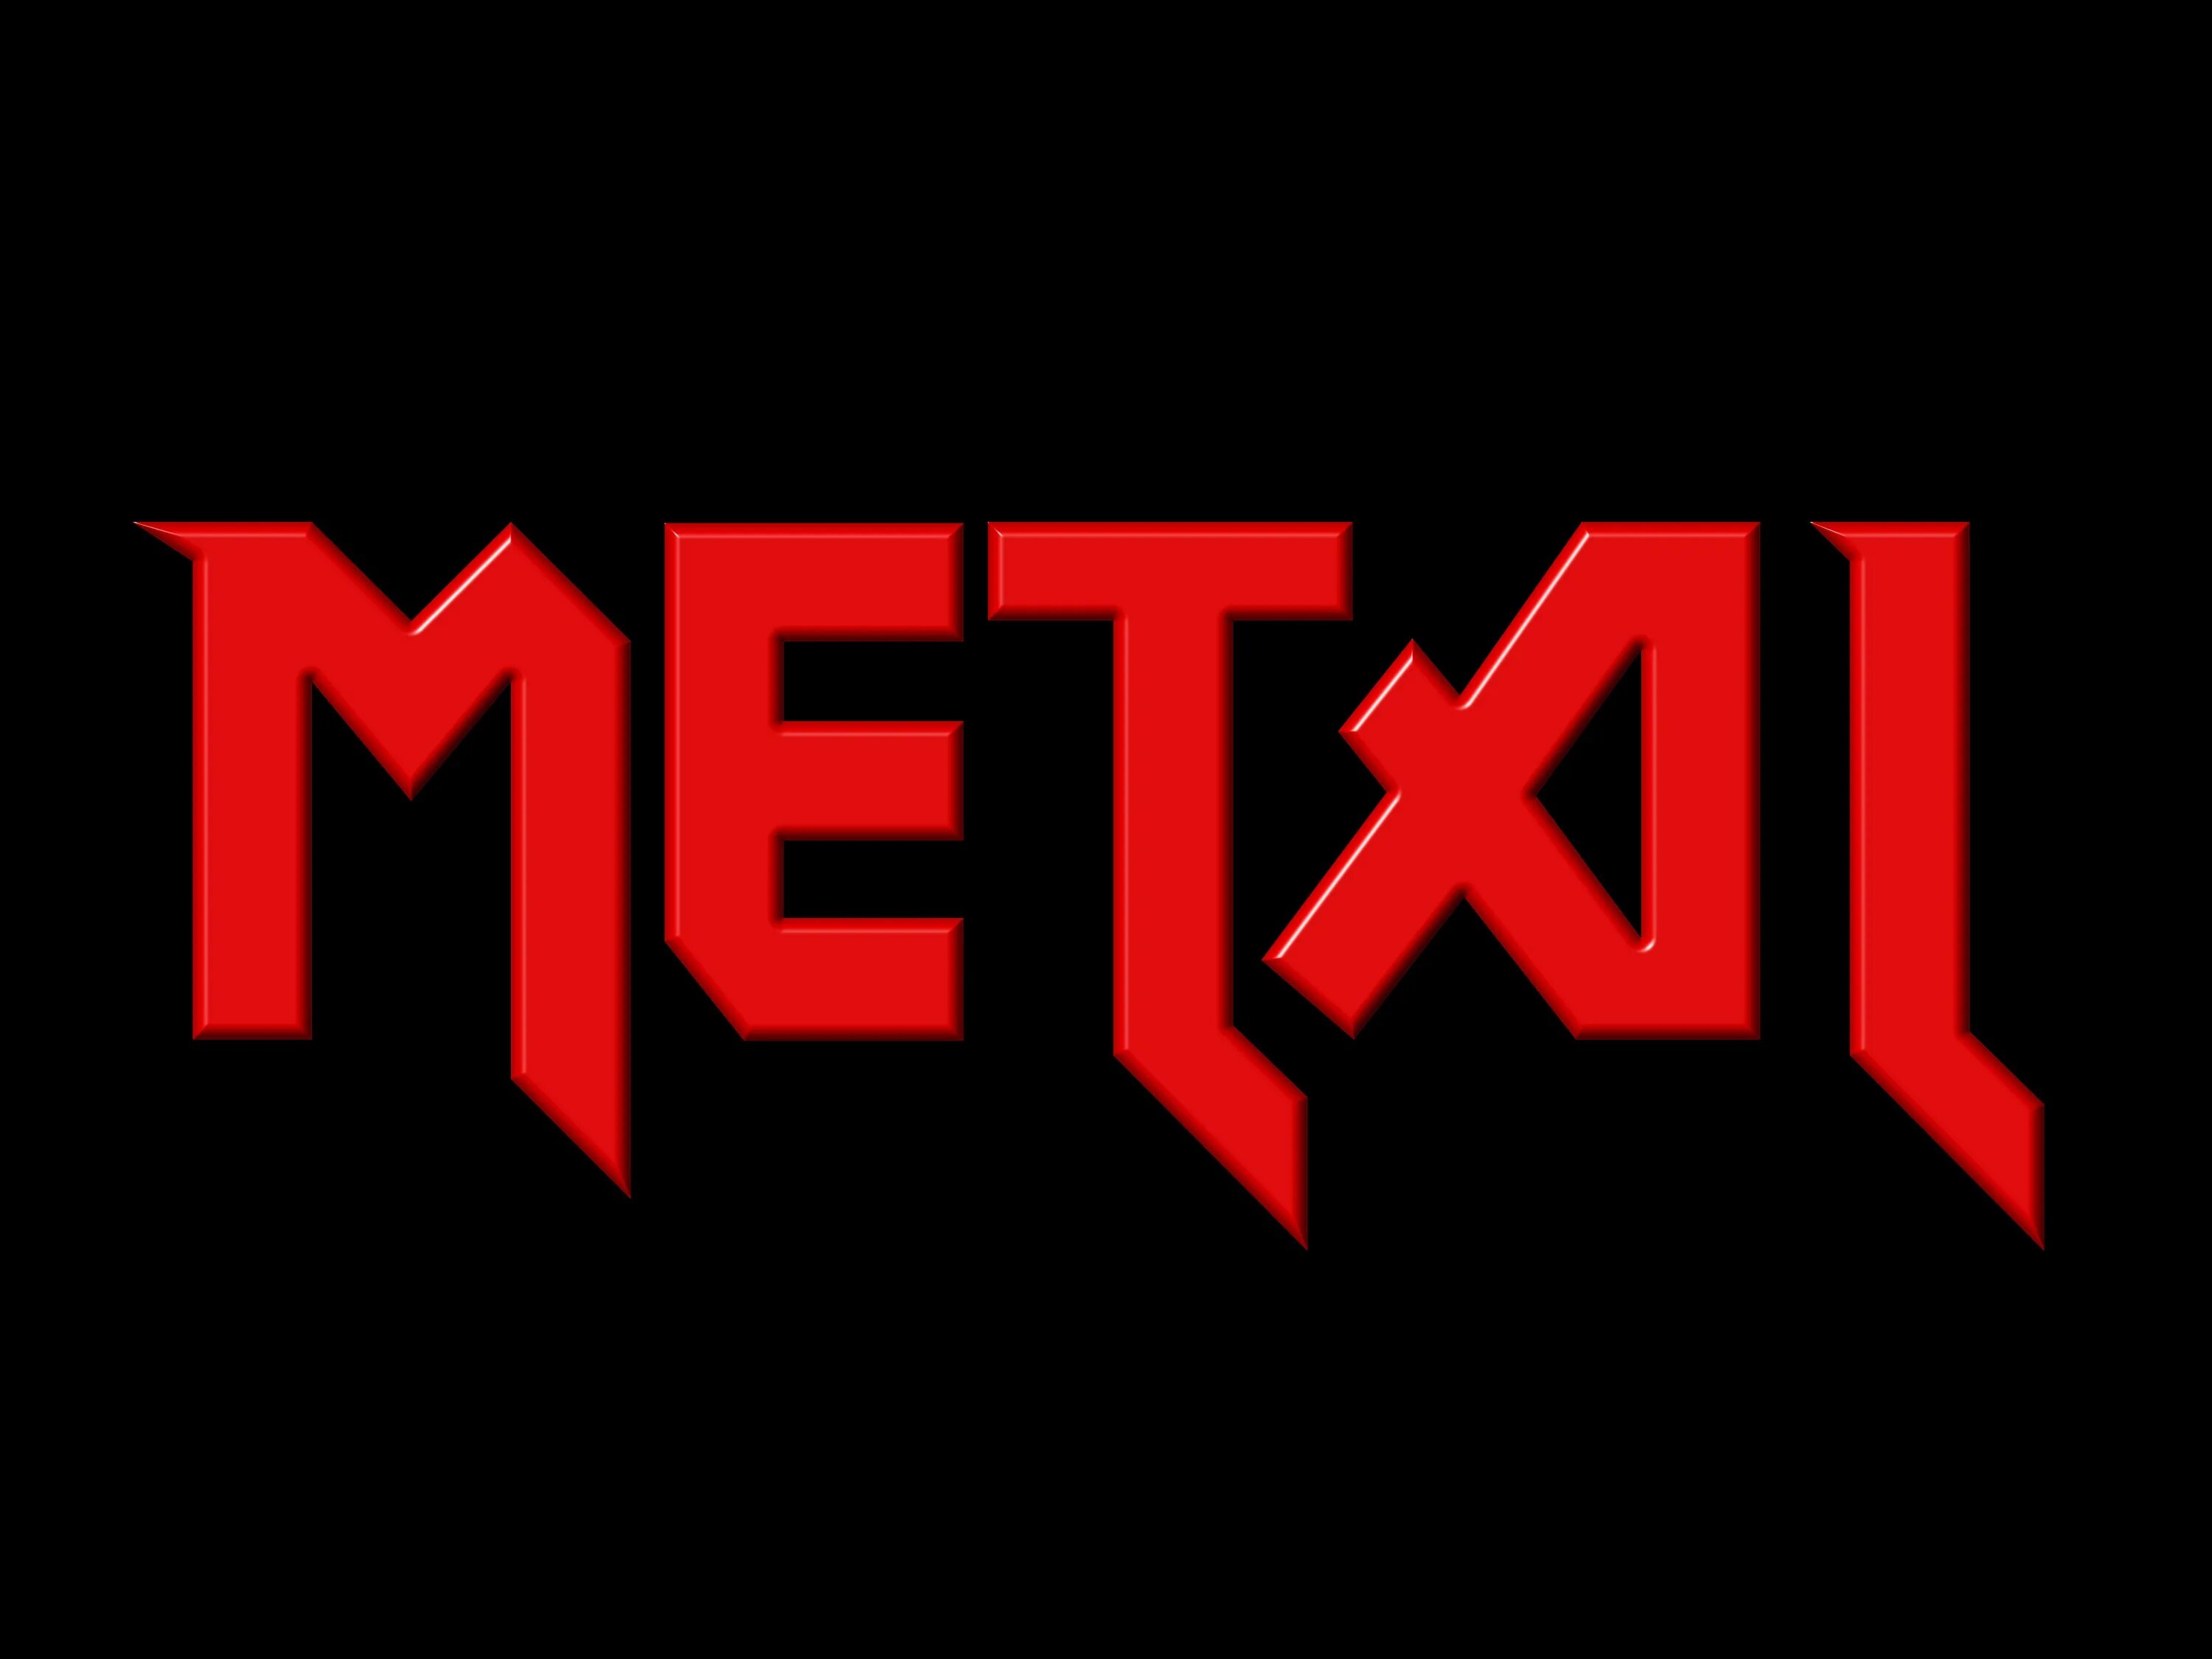 Metal надпись. Надпись на металле. Хеви металл надпись. Тяжёлый металл логотип. Металл музыка это